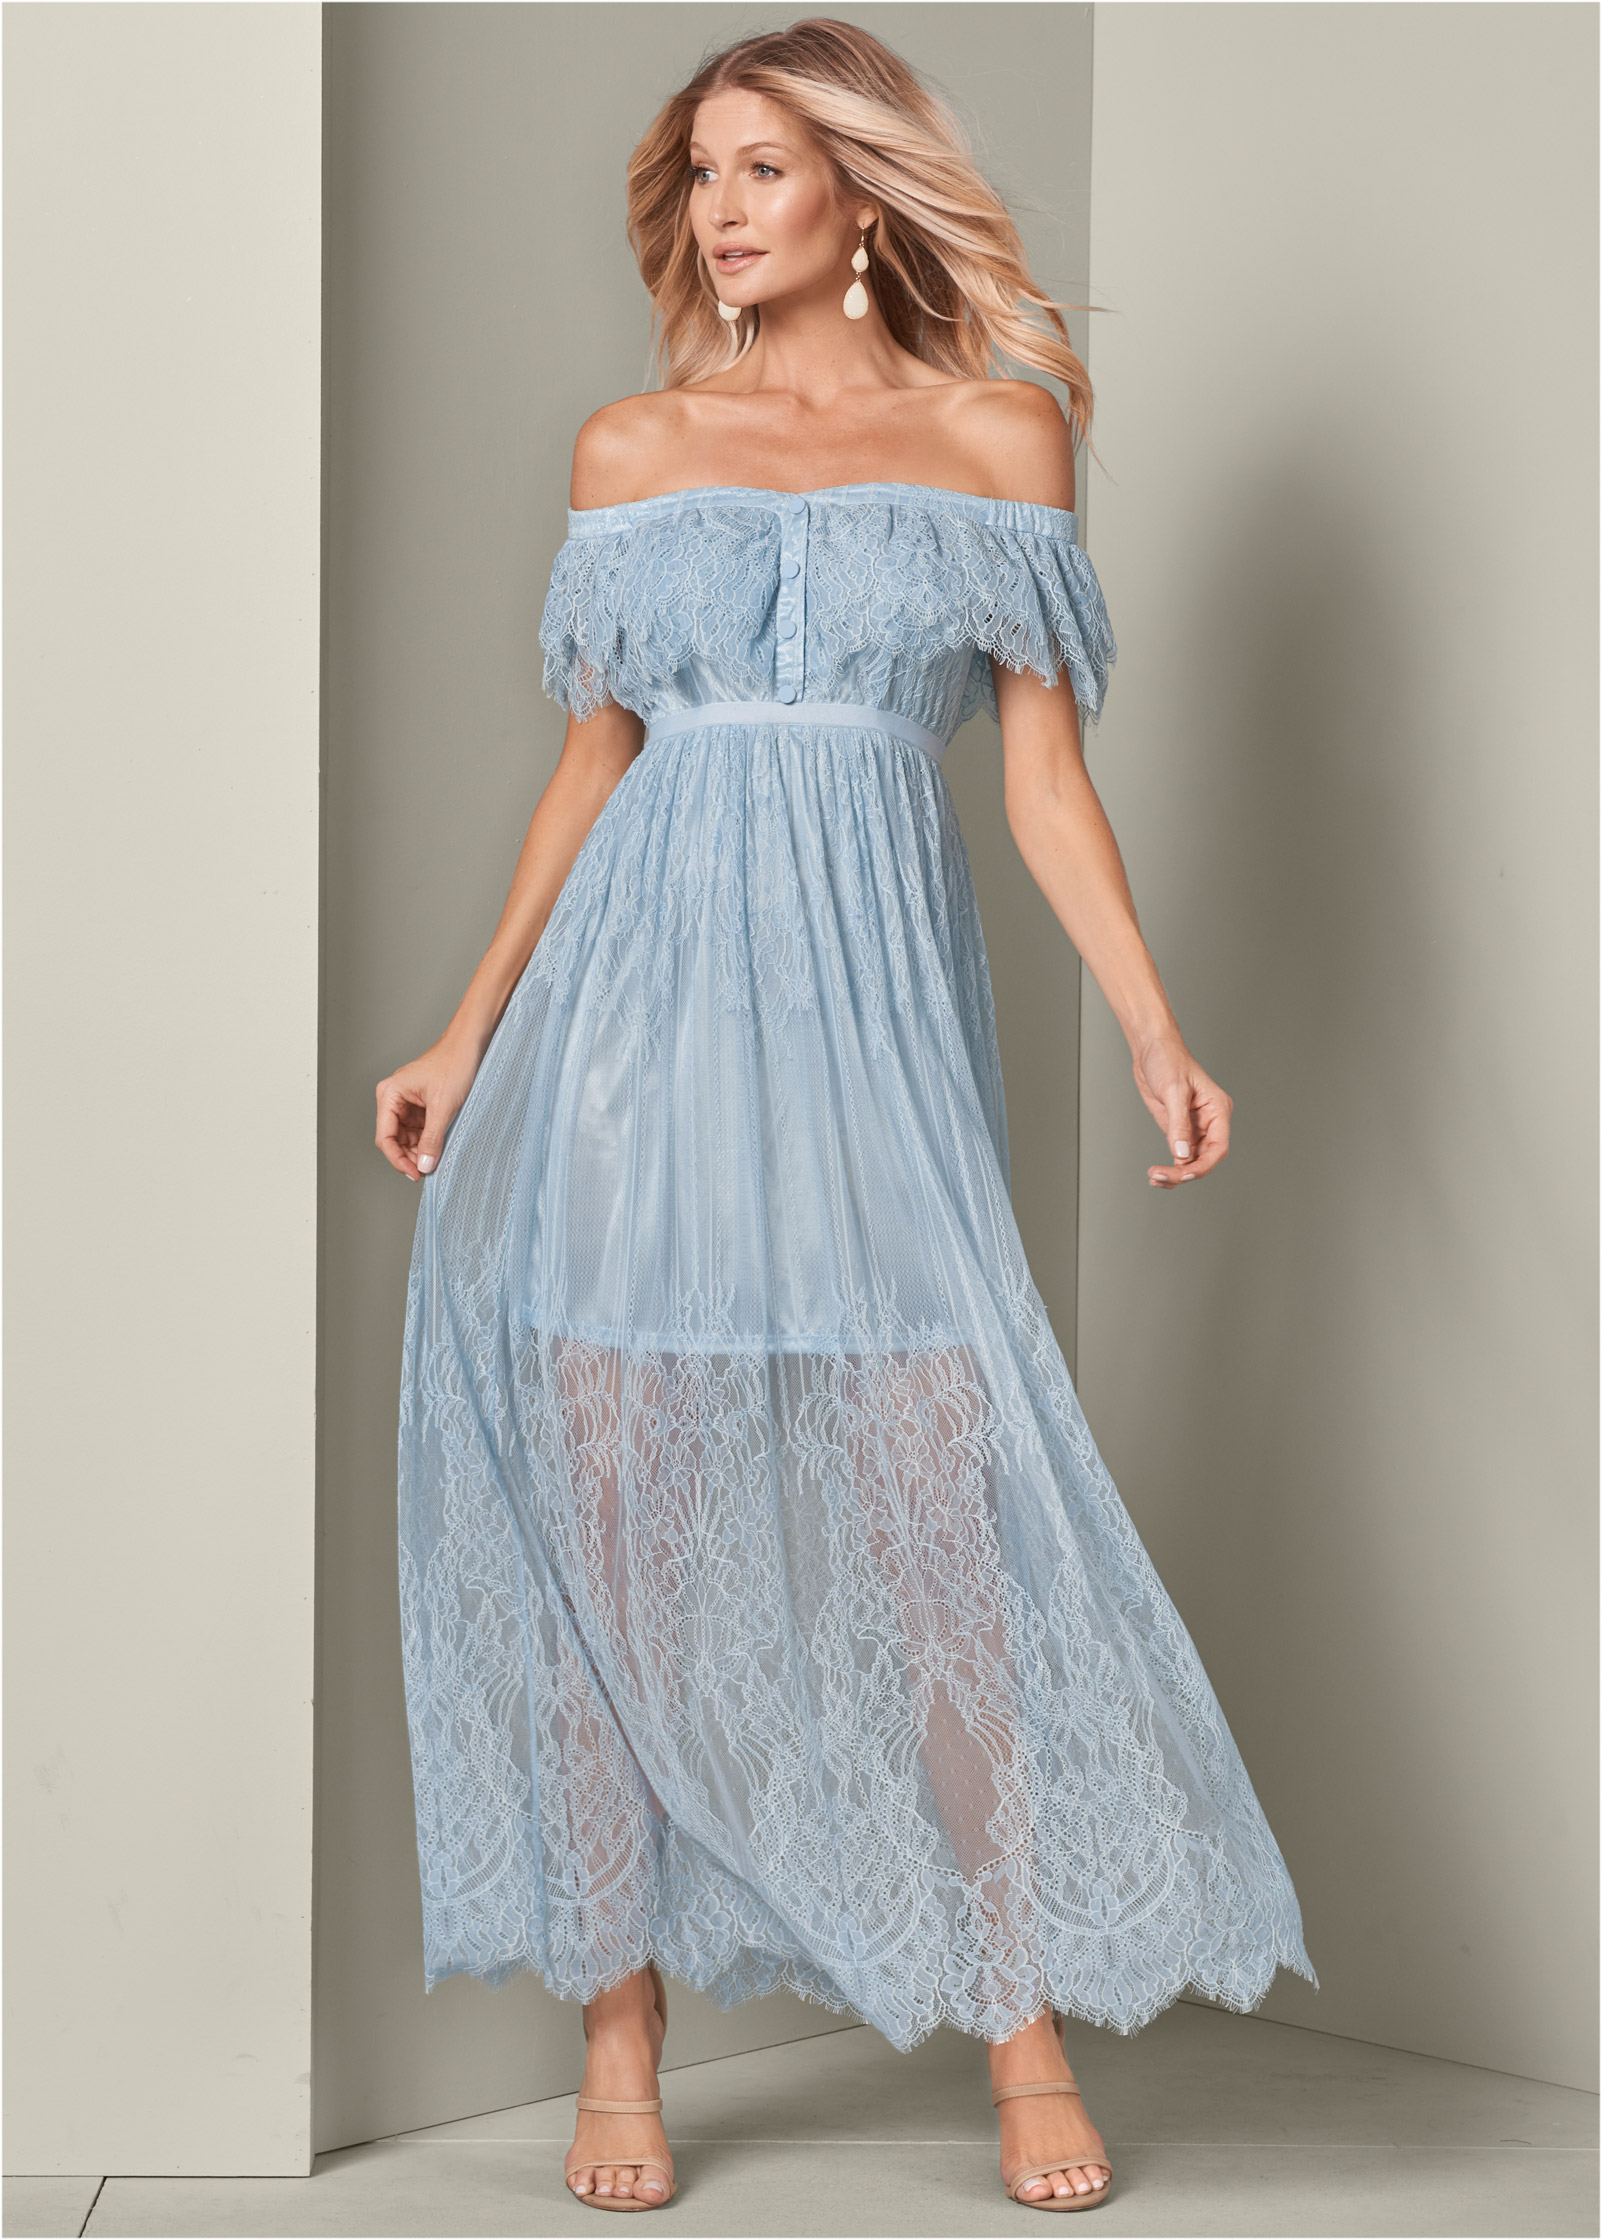 Light Blue Lace Dress Hot Sale, UP TO ...